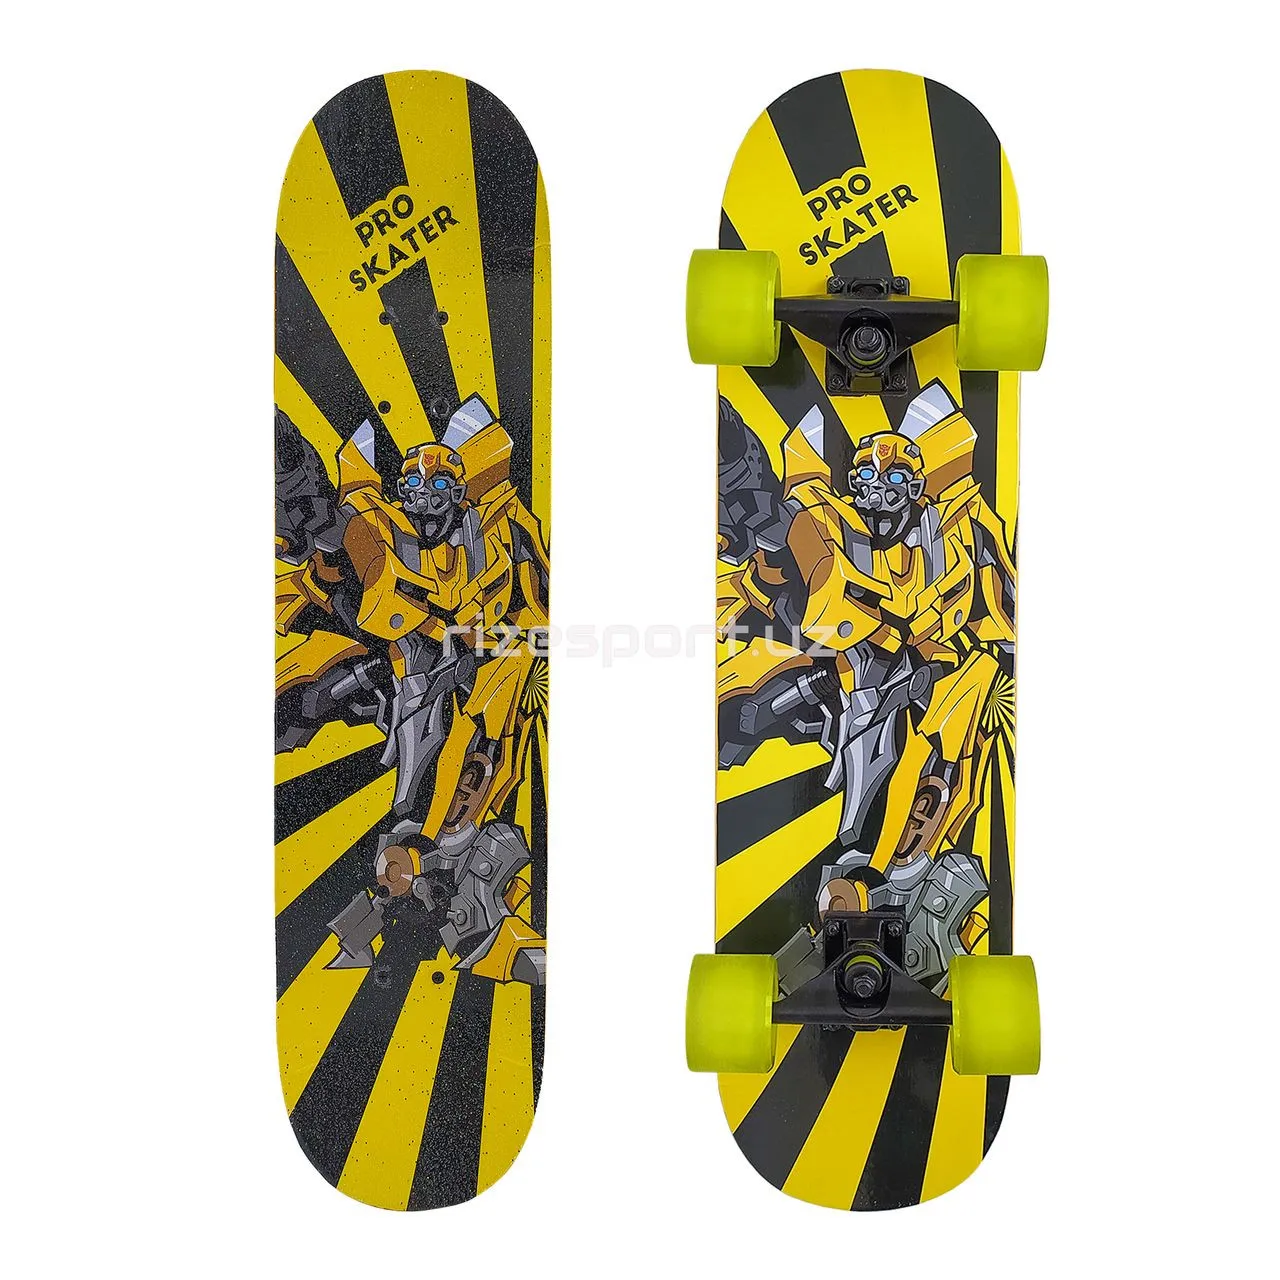 Skateboard Pro Skater Bumblebee 31"#1